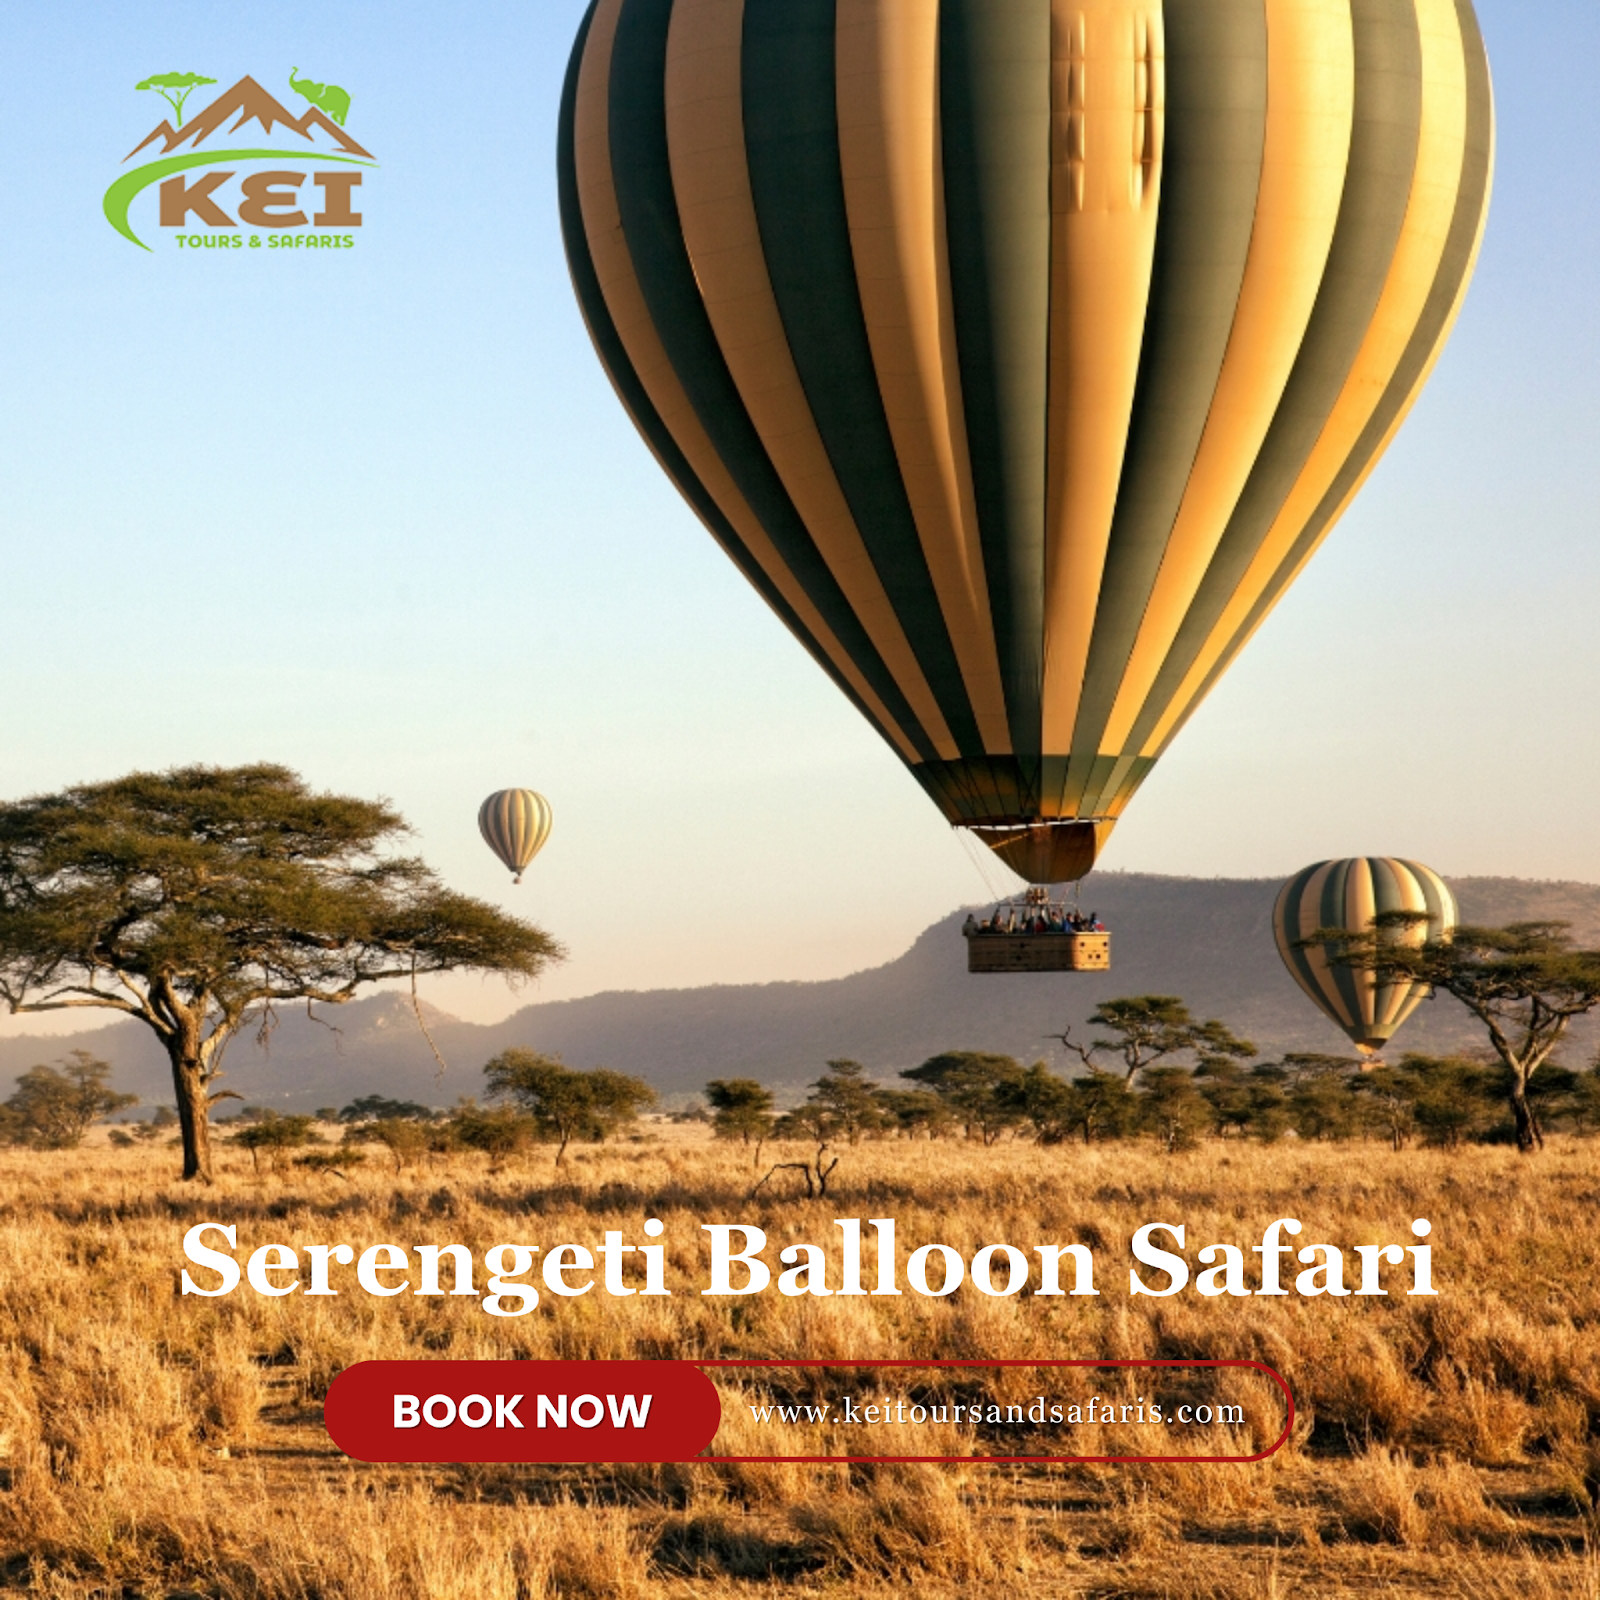 Kei Tours and Safaris Ltd Offers Exclusive Serengeti Balloon Safari Packages